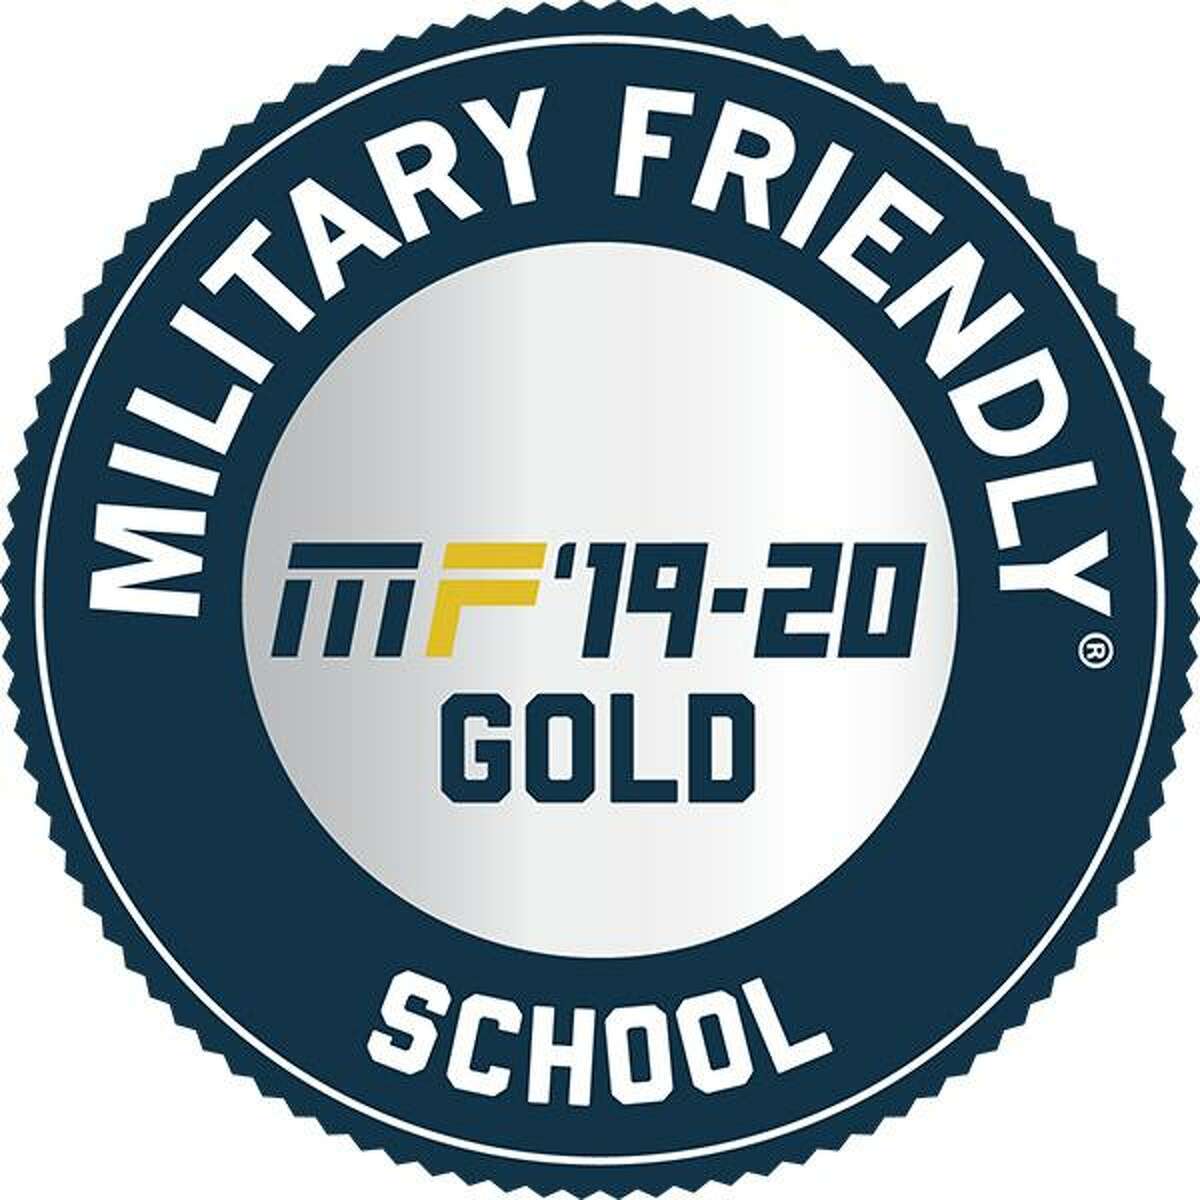 Military Friendly School award for 2019-2020